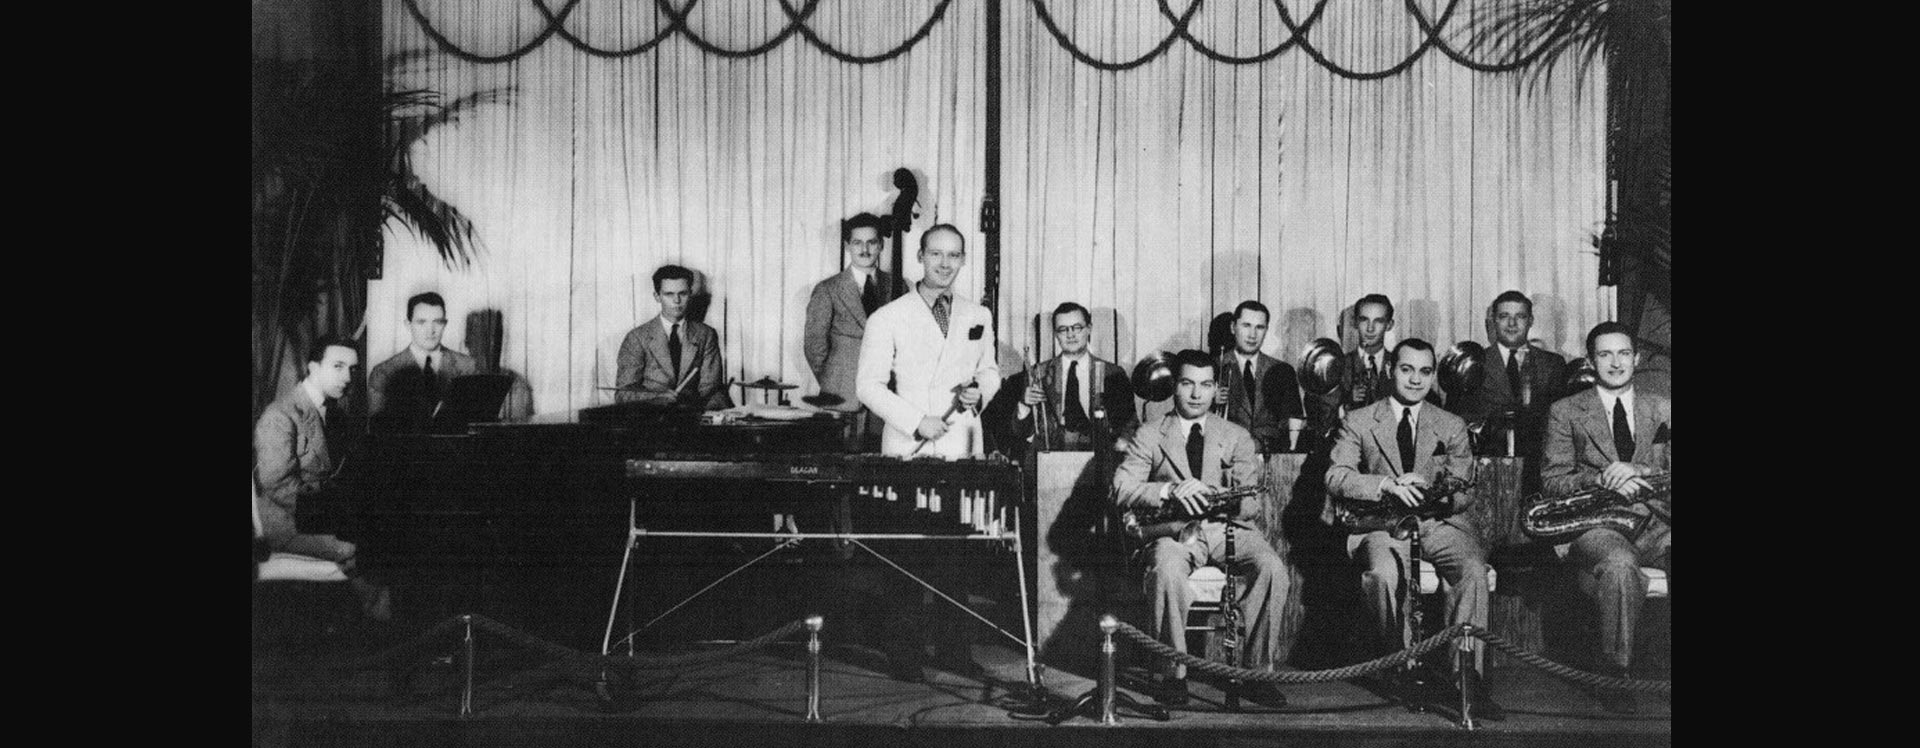 Red Norvo and his Orchestra circa 1936-37